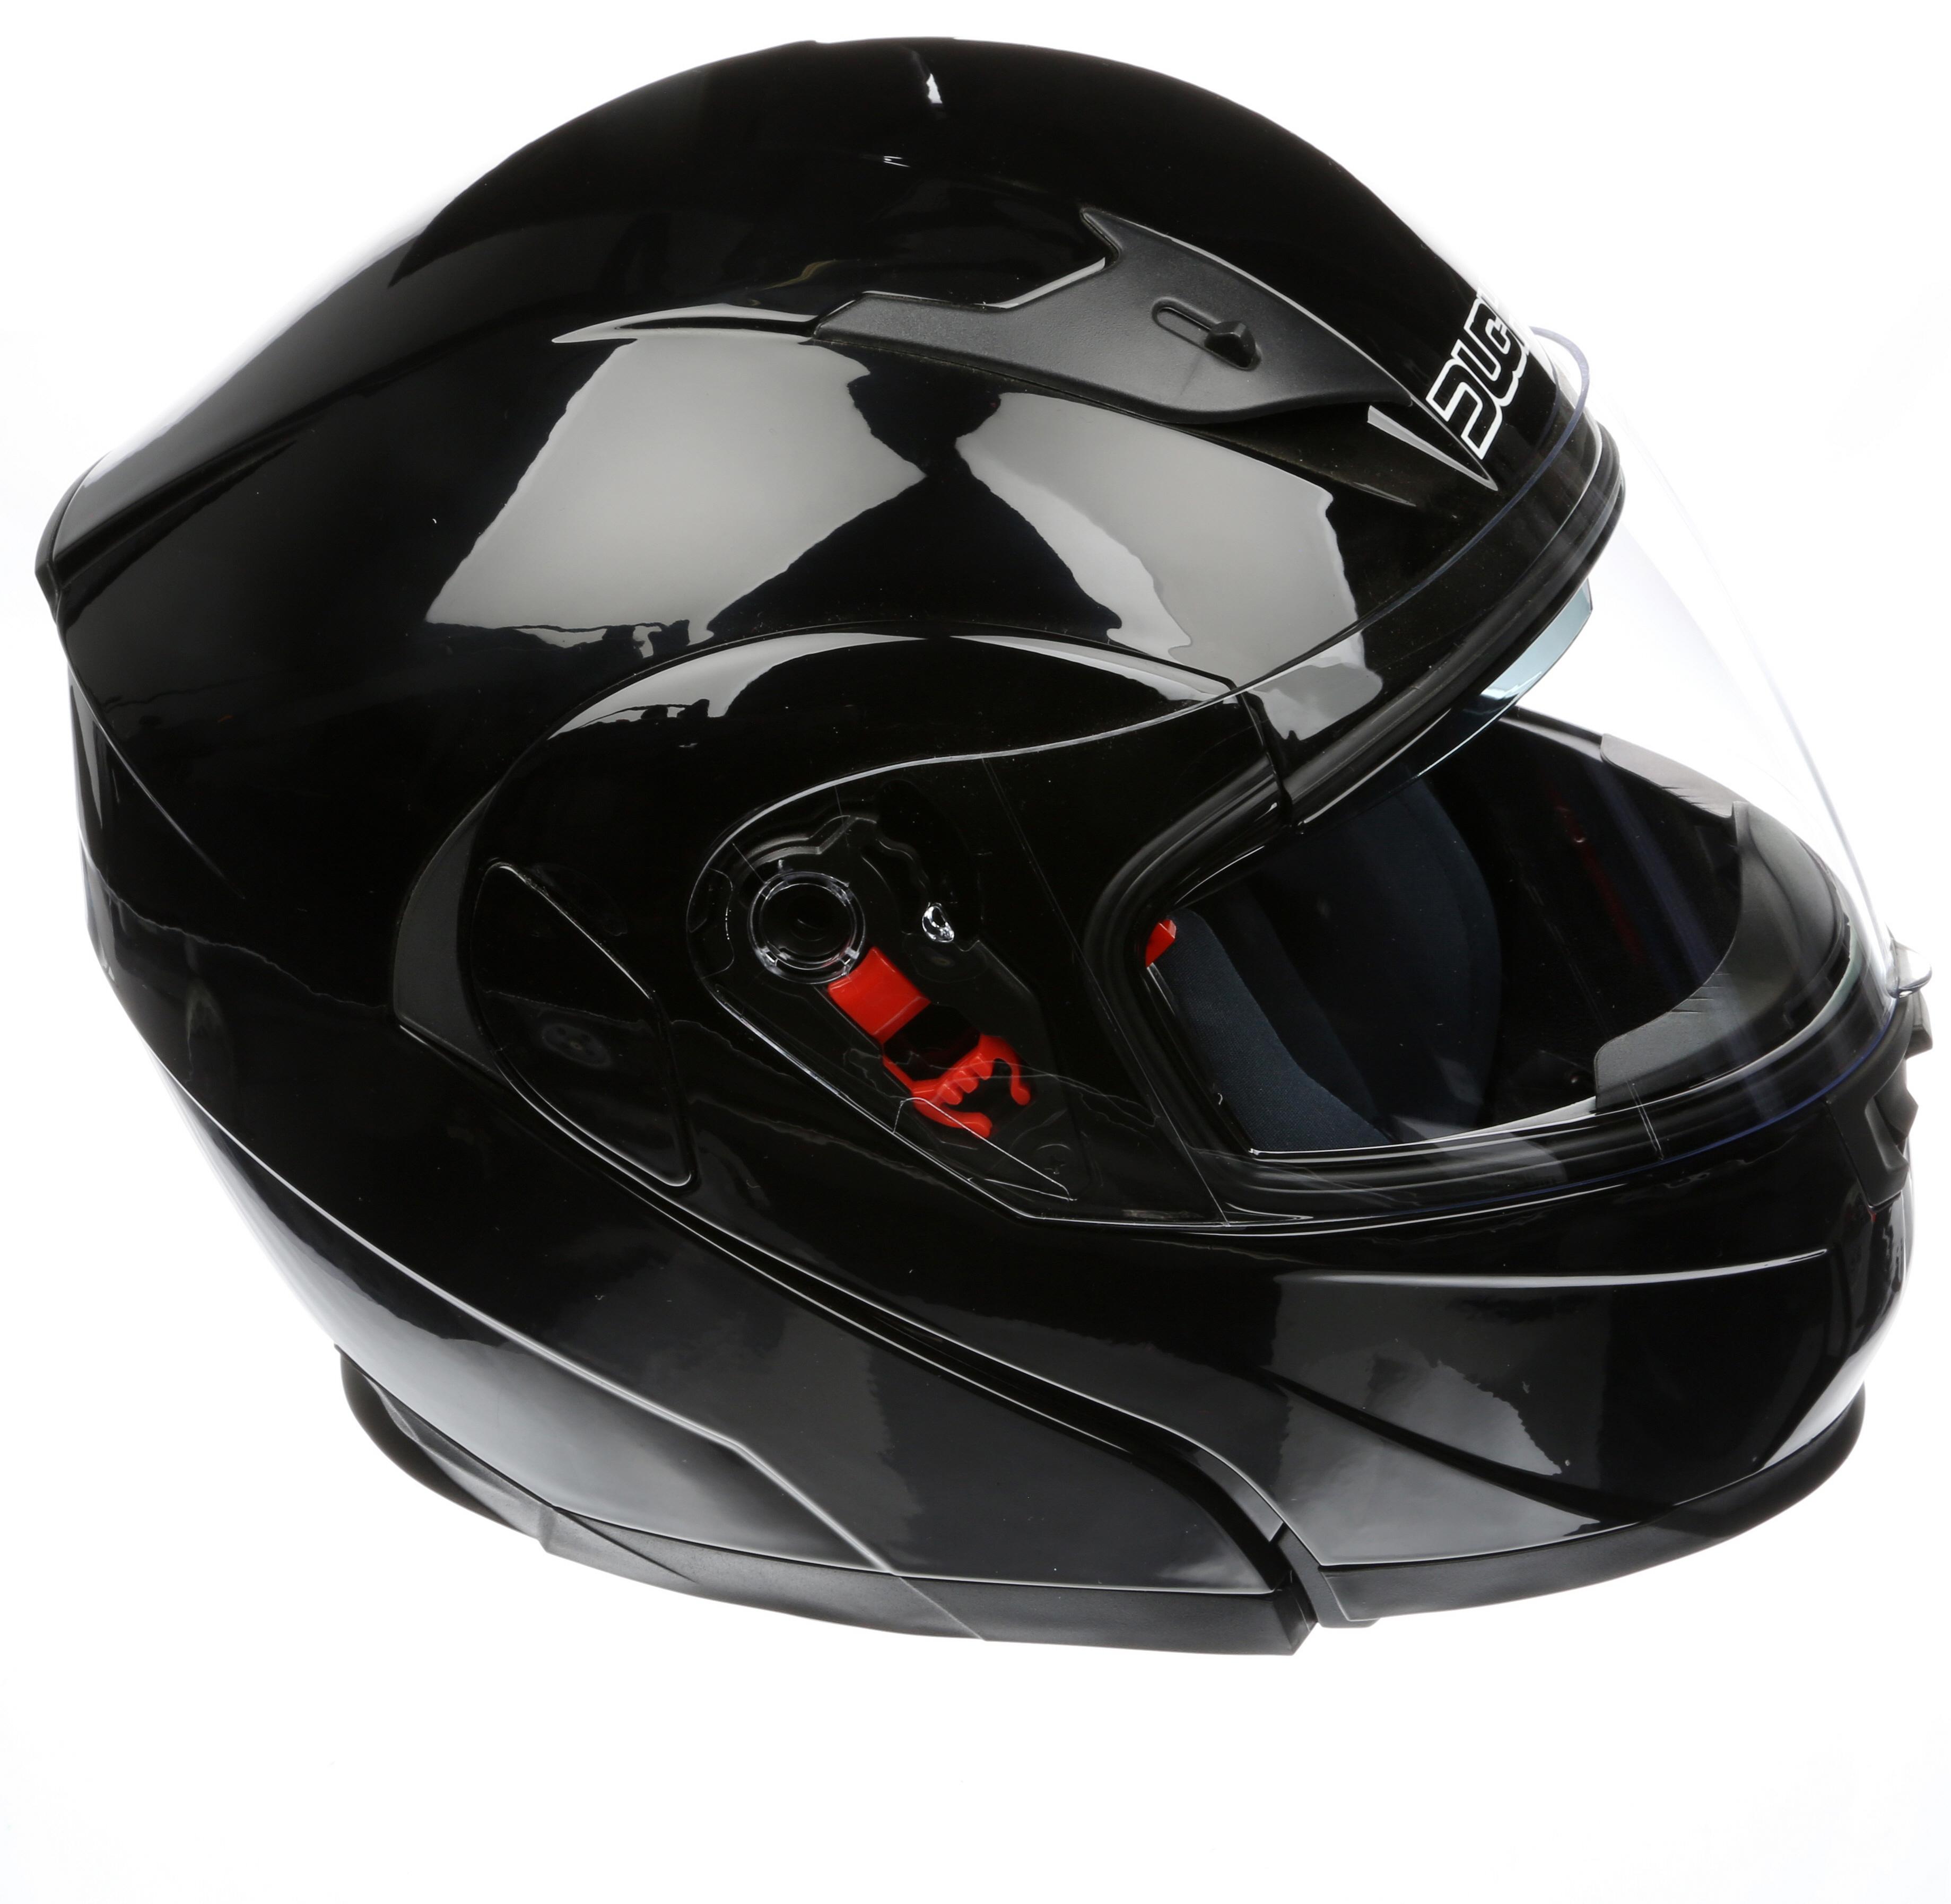 Duchinni D606 Flip Up Front Motorcycle Helmet White Crash Lids Scooter Motorbike